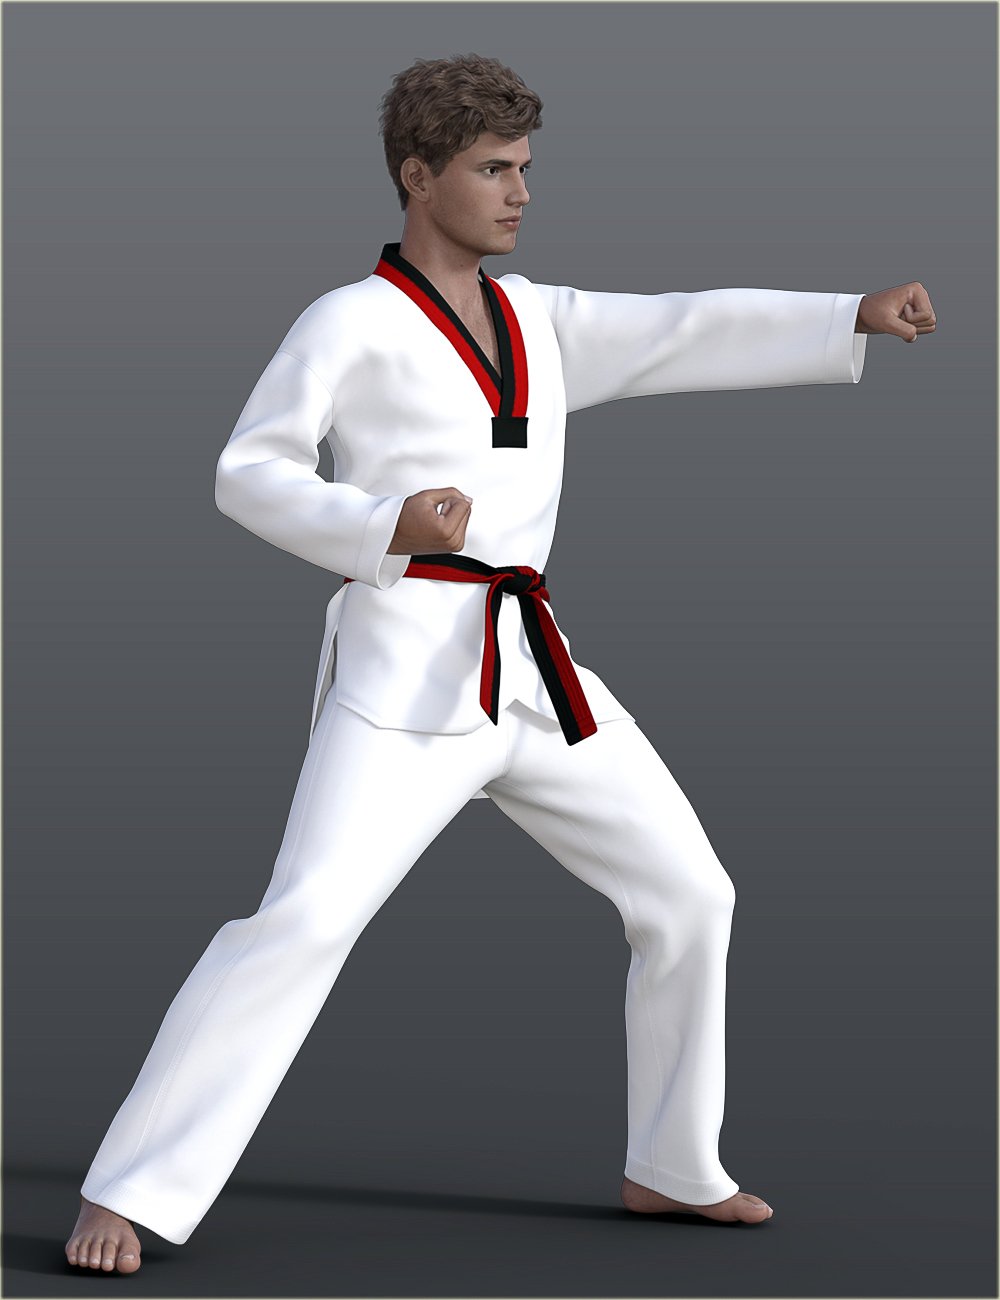 dForce H&C Taekwondo Suit for Genesis 8 Male(s) by: IH Kang, 3D Models by Daz 3D